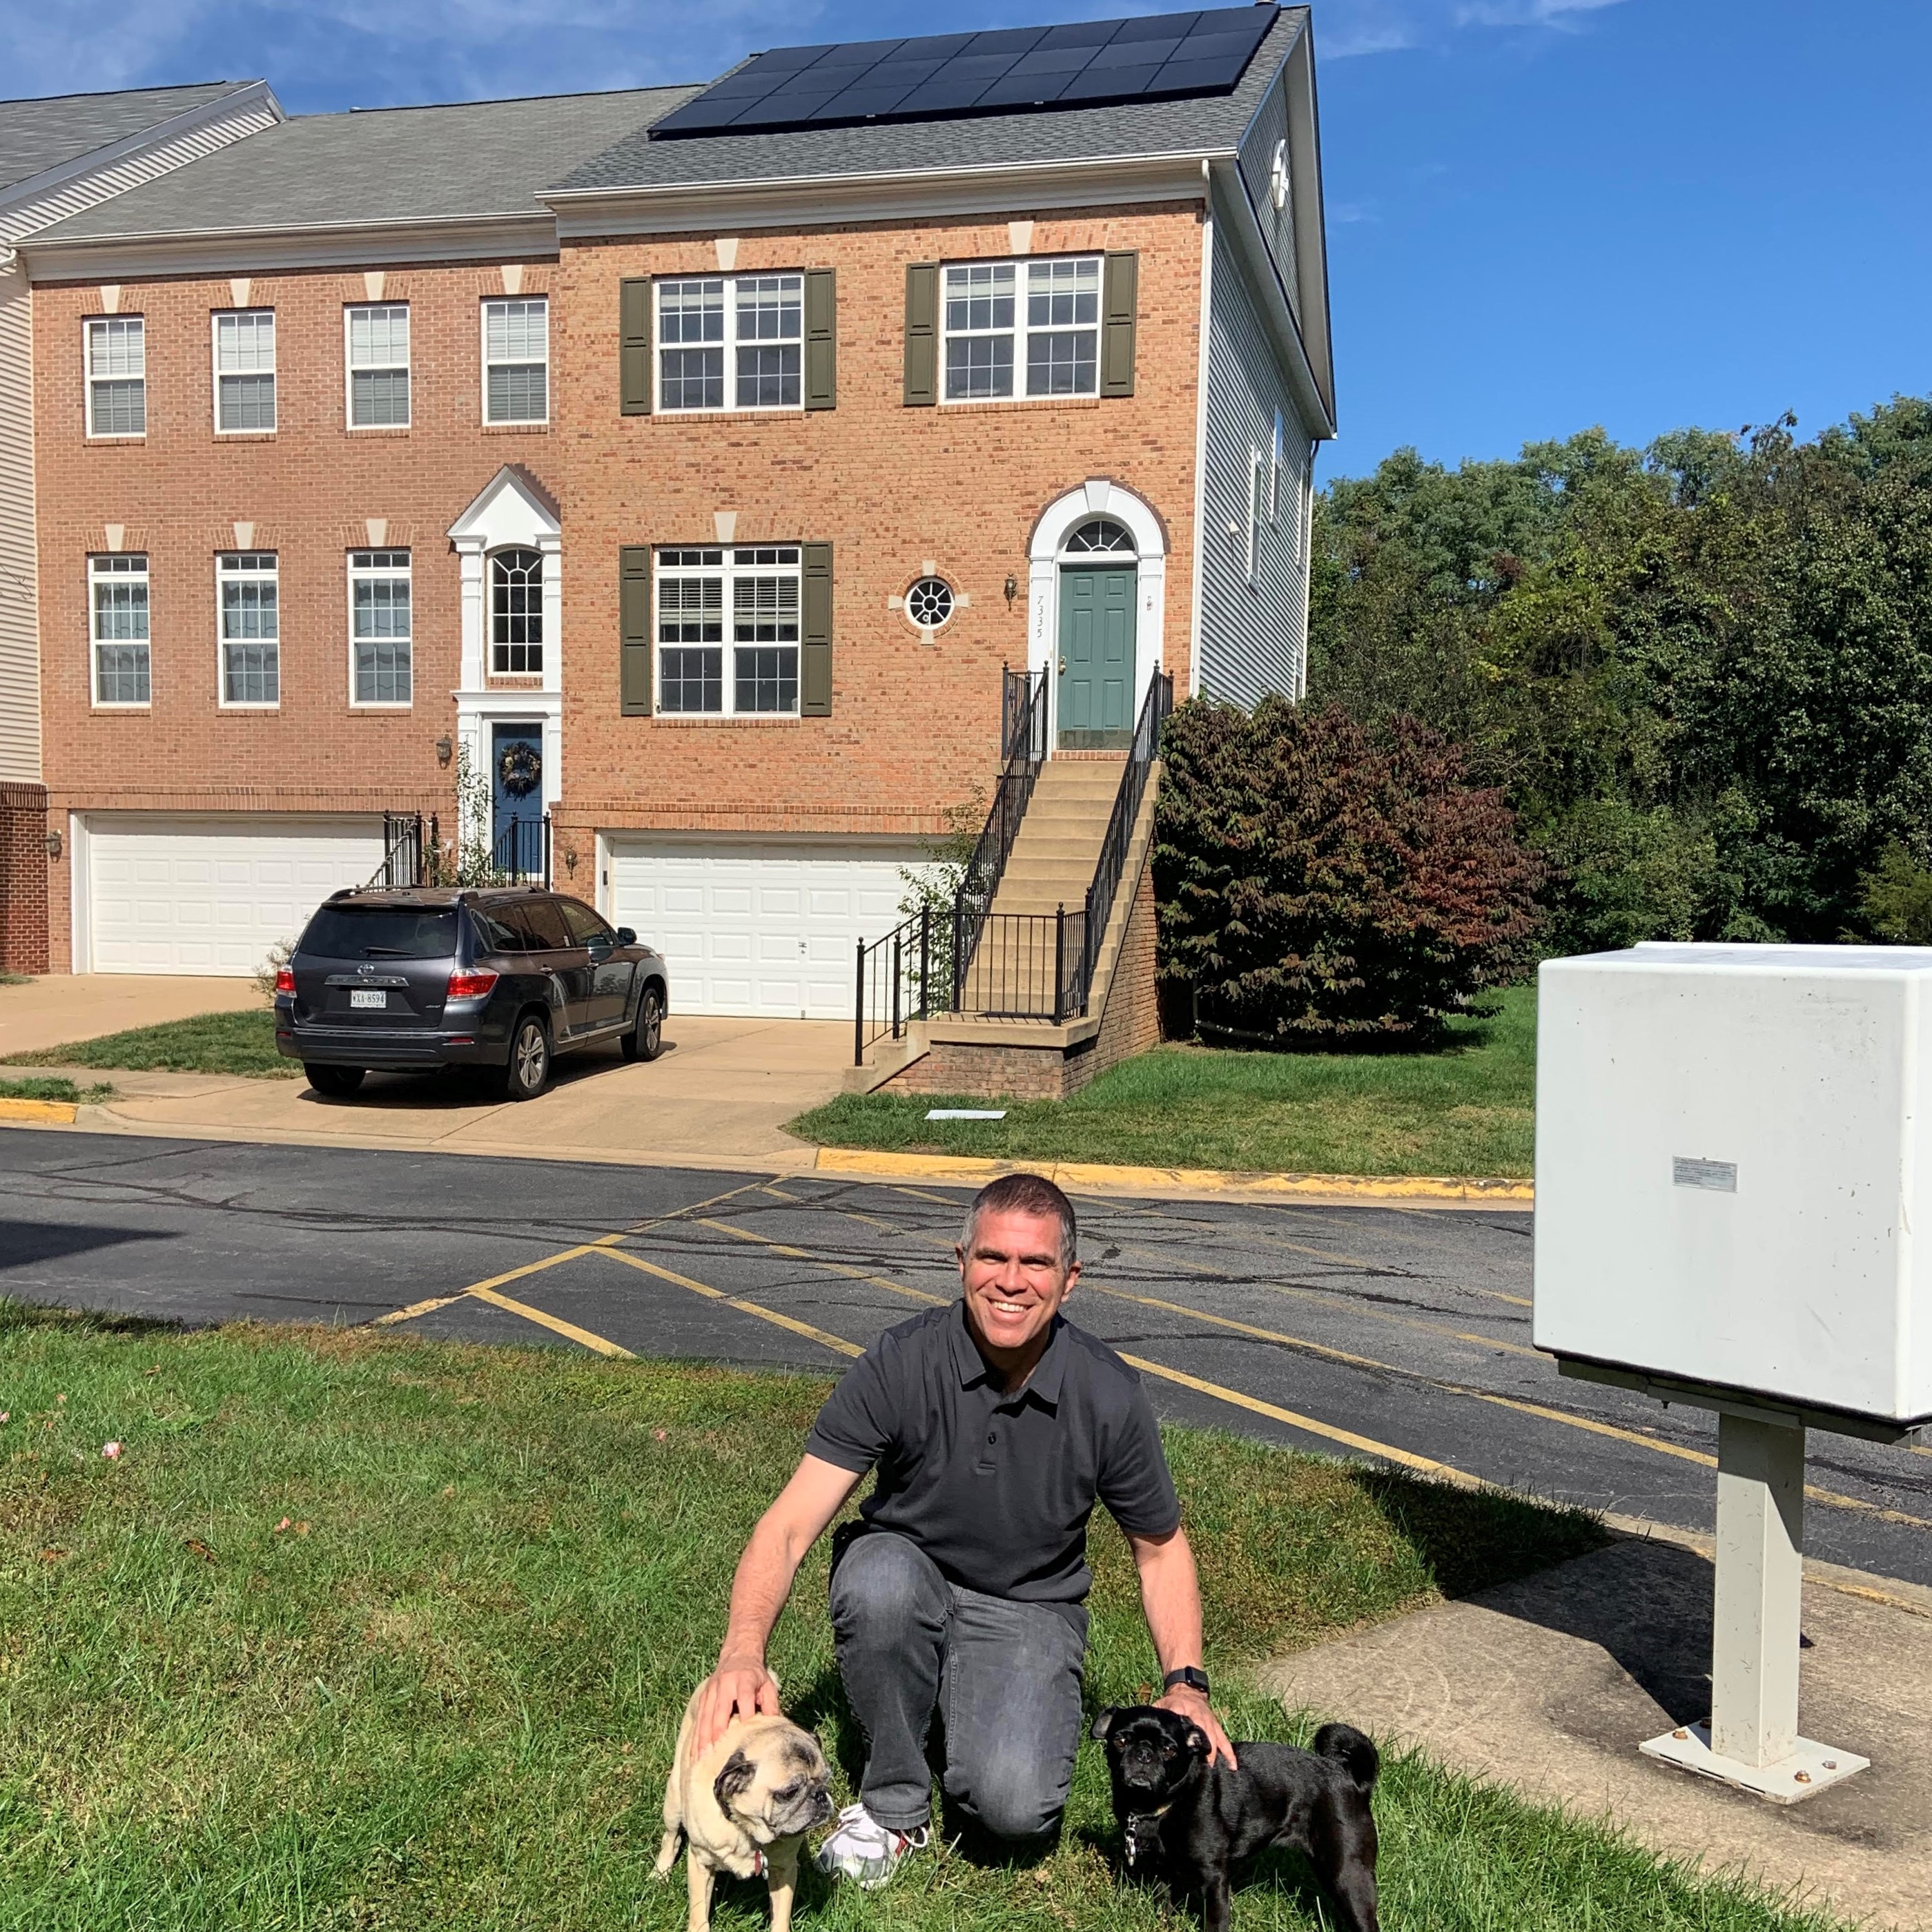 Doggies and solar square